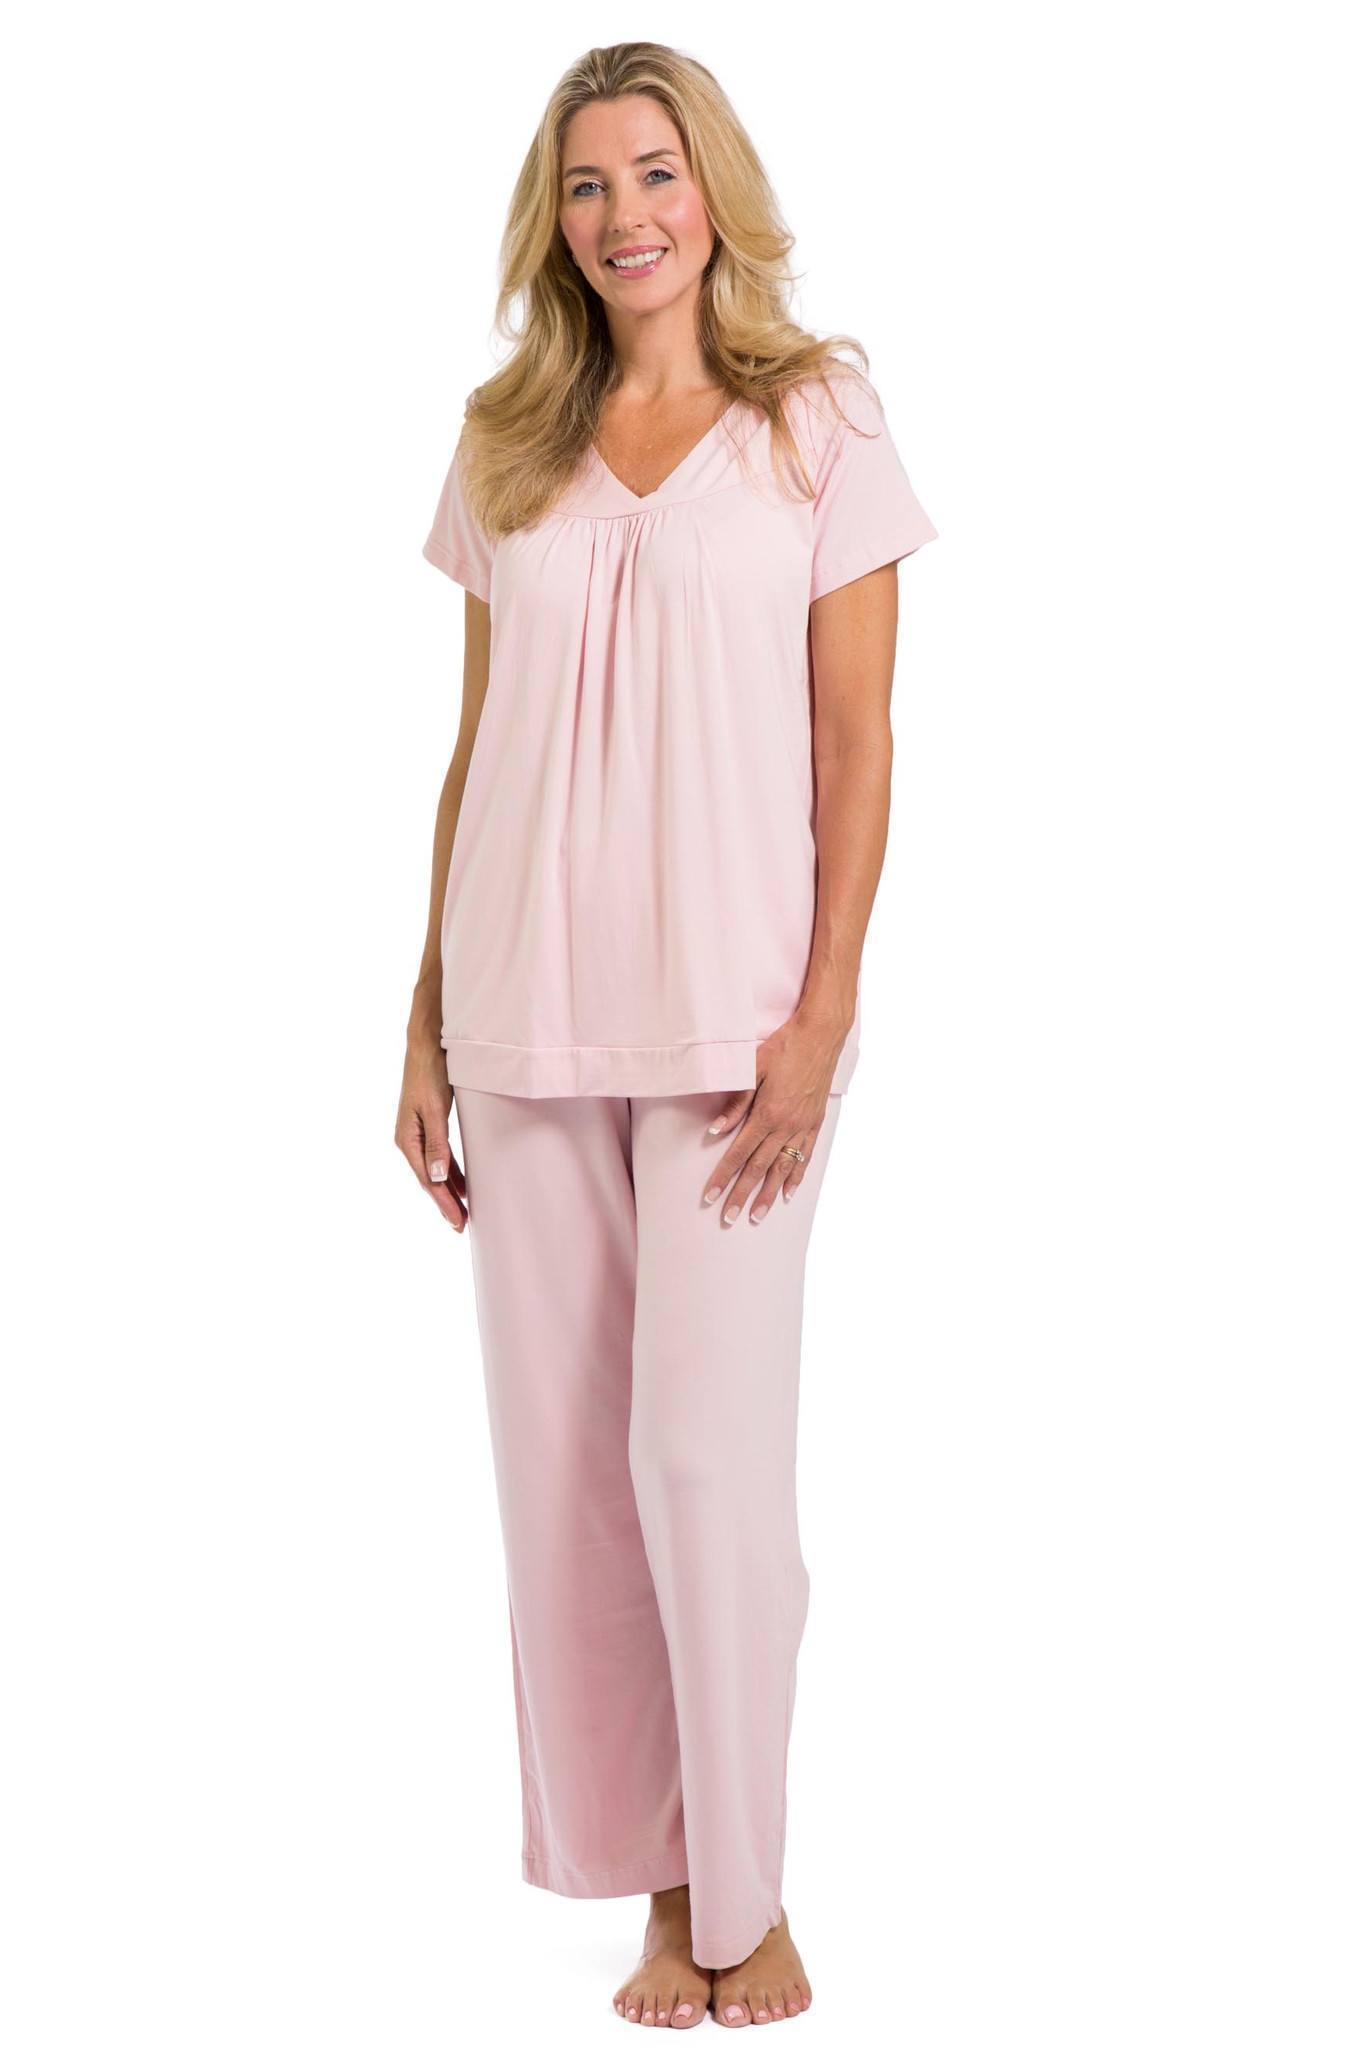 EA'S SECRET Womens Pajama Sets 100% Cotton Short Sleeve Shirt and